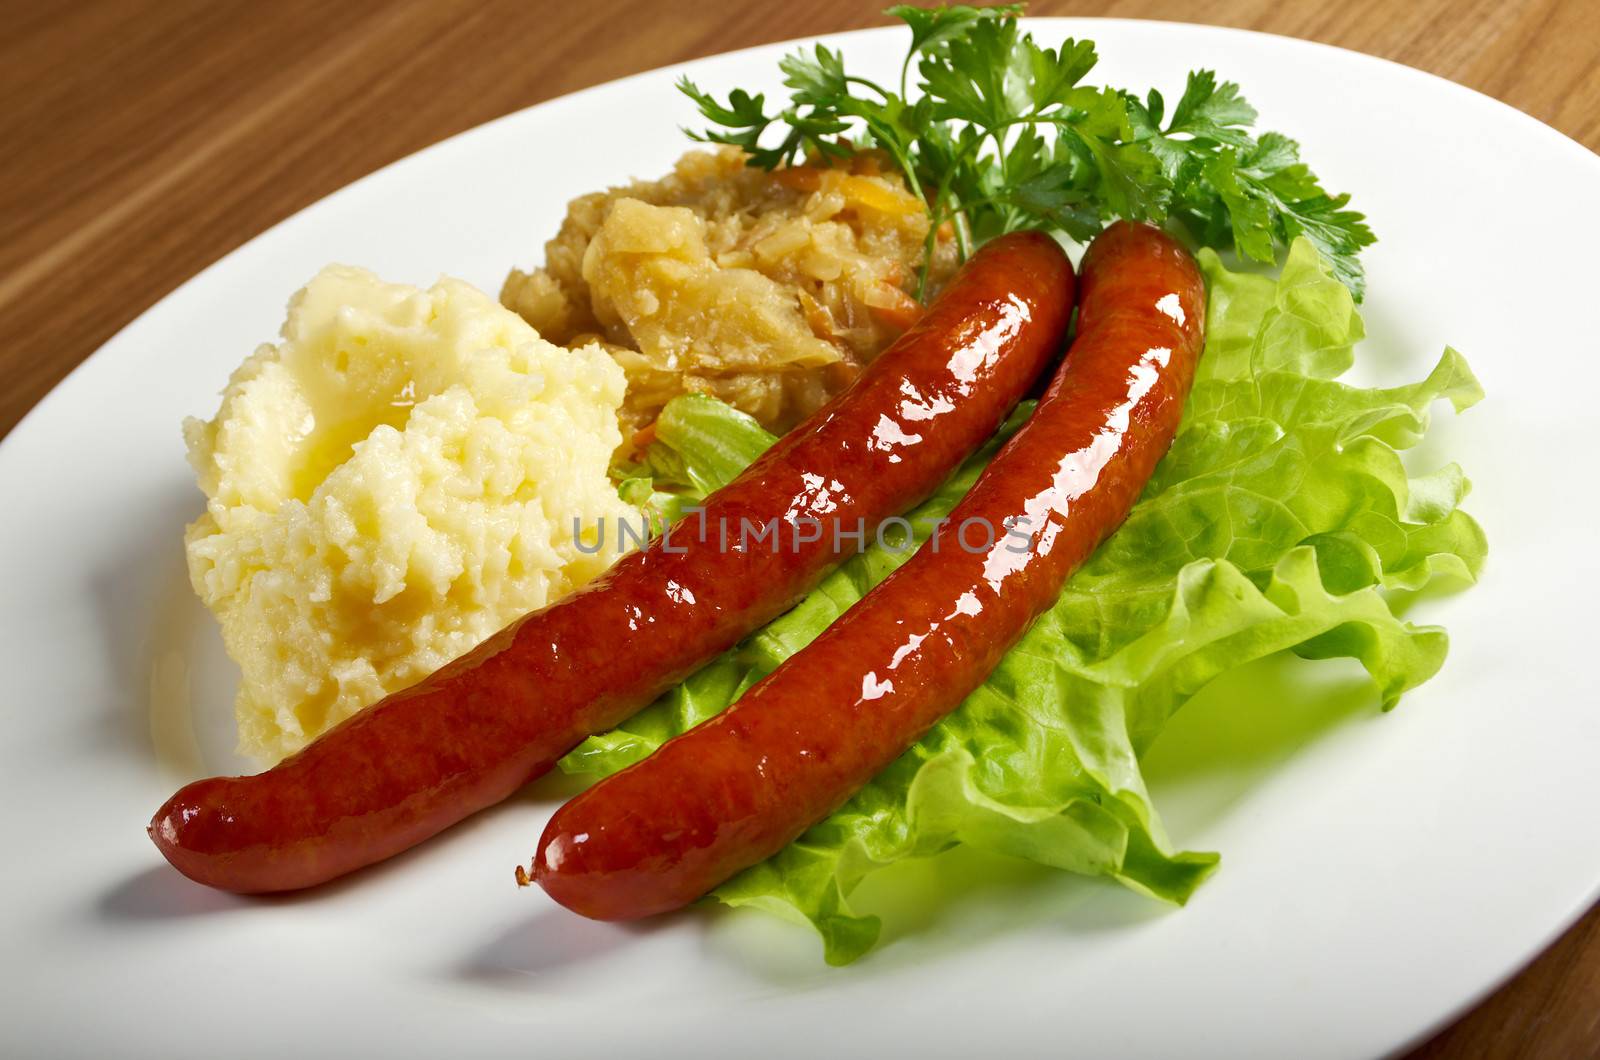 wiener sausages by Fanfo